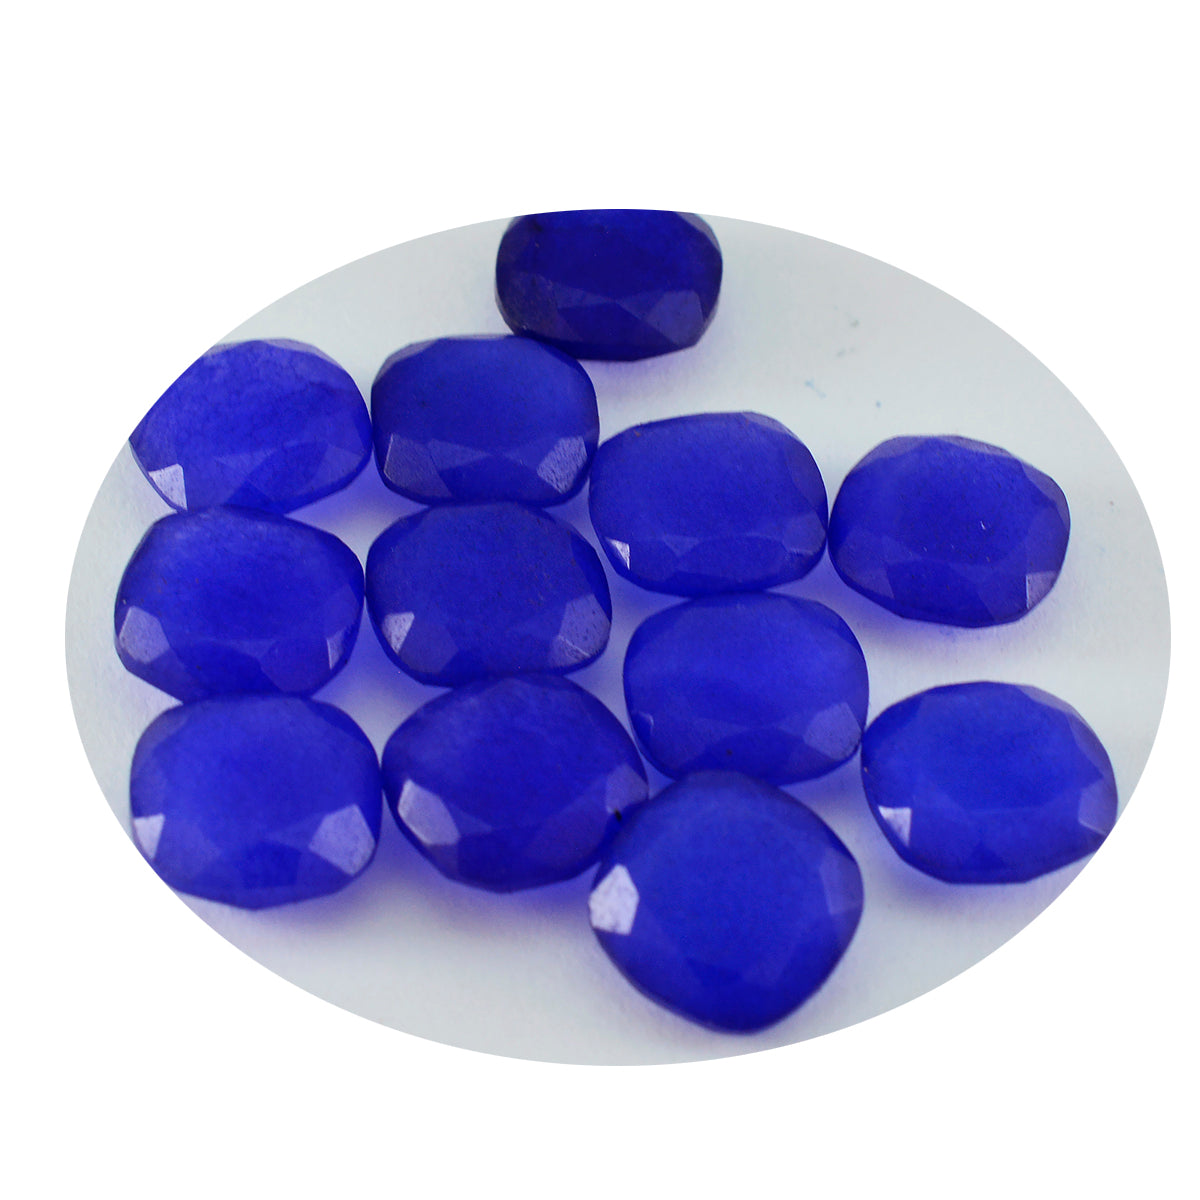 riyogems 1 pezzo di diaspro blu naturale sfaccettato 7x7 mm a forma di cuscino, gemma sfusa di qualità aa